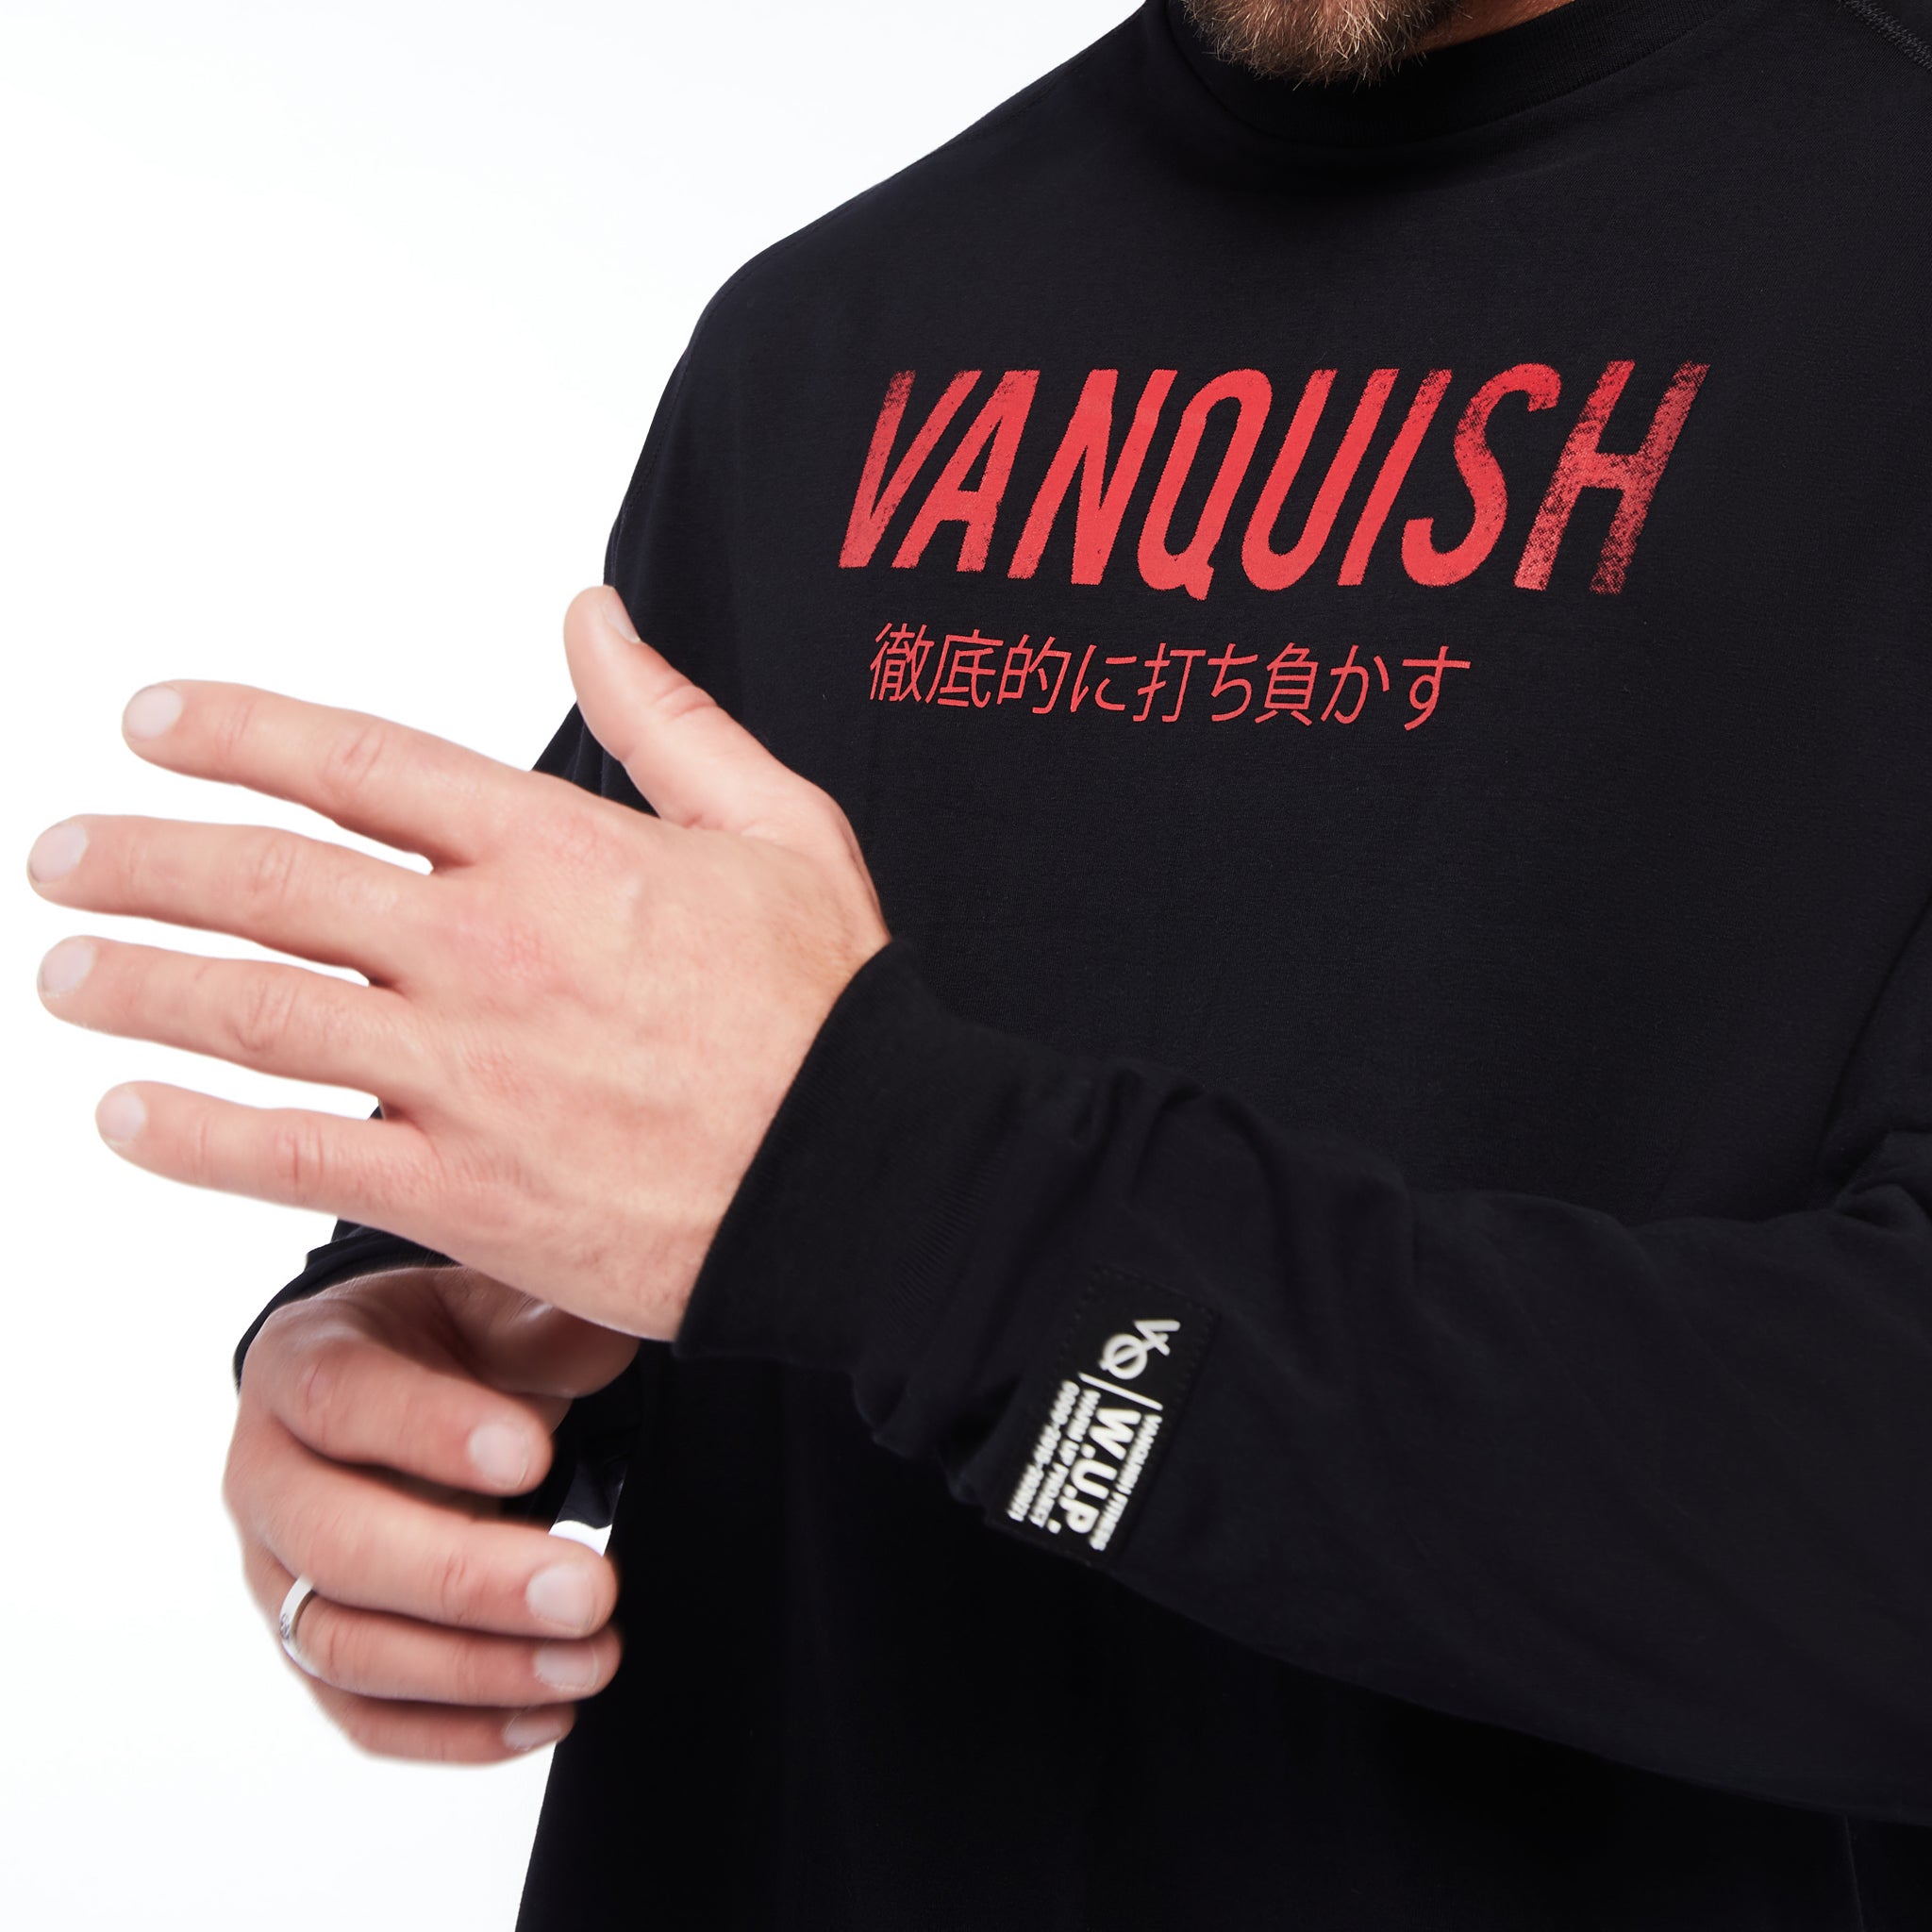 Vanquish Warm Up Project Japan Oversized Long Sleeve T Shirt